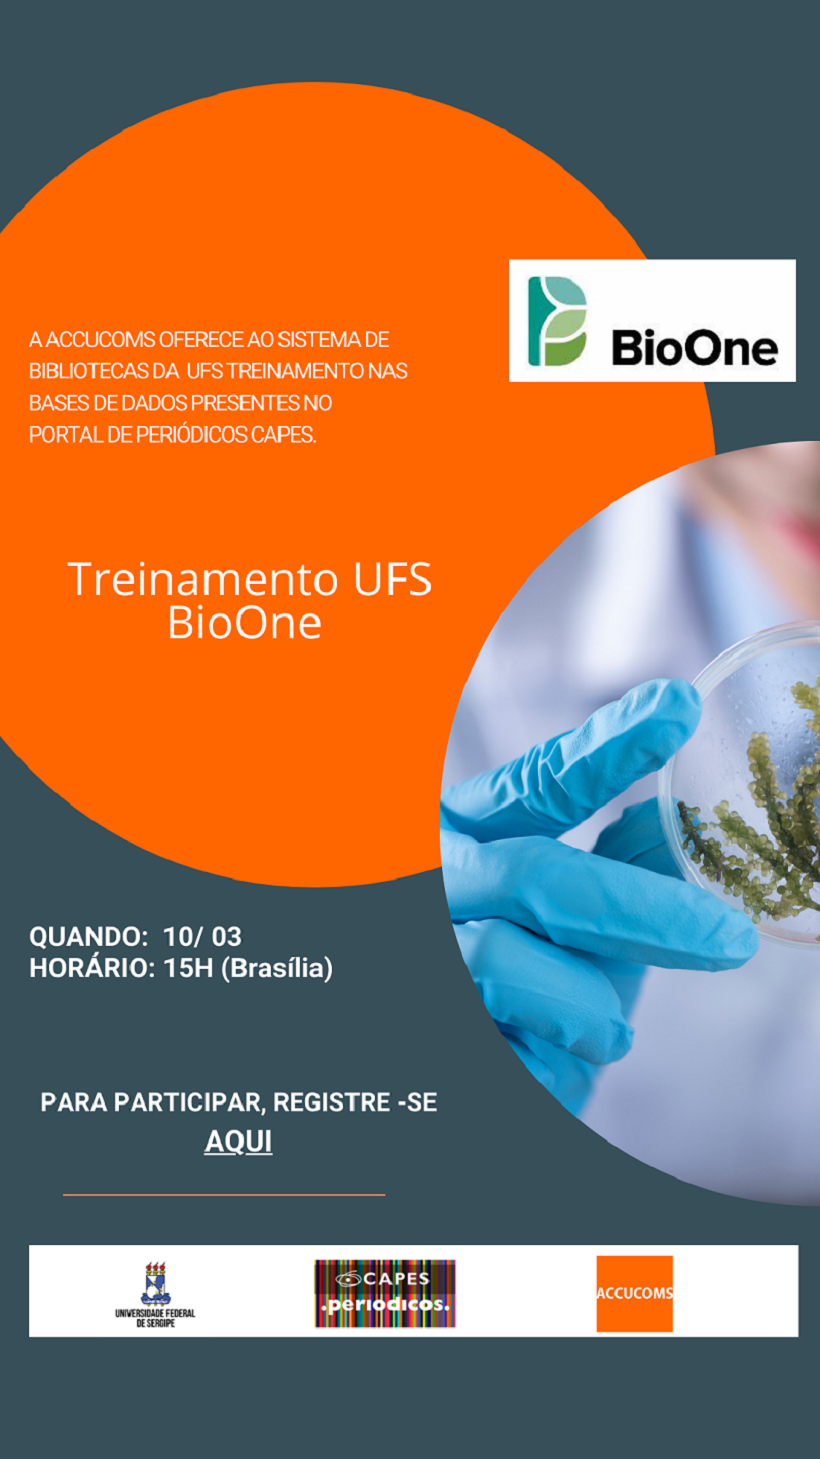 Treinamento BioOne - UFS